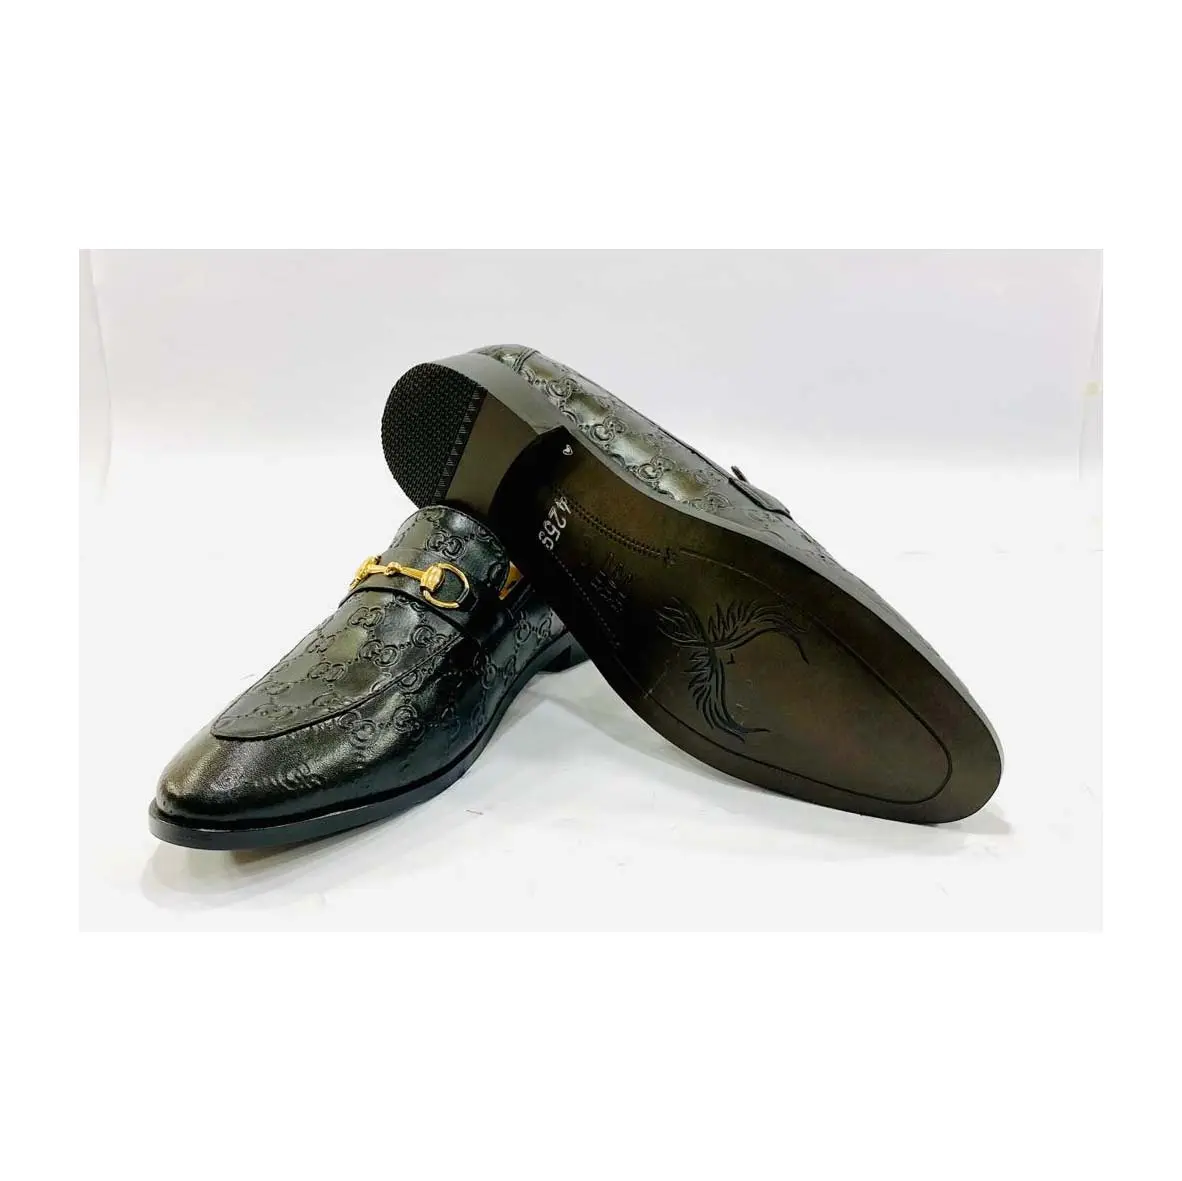 Sapatos masculinos de couro legítimo branco marinho por atacado sapatos masculinos de oficial | Sapatos de couro marinho personalizados